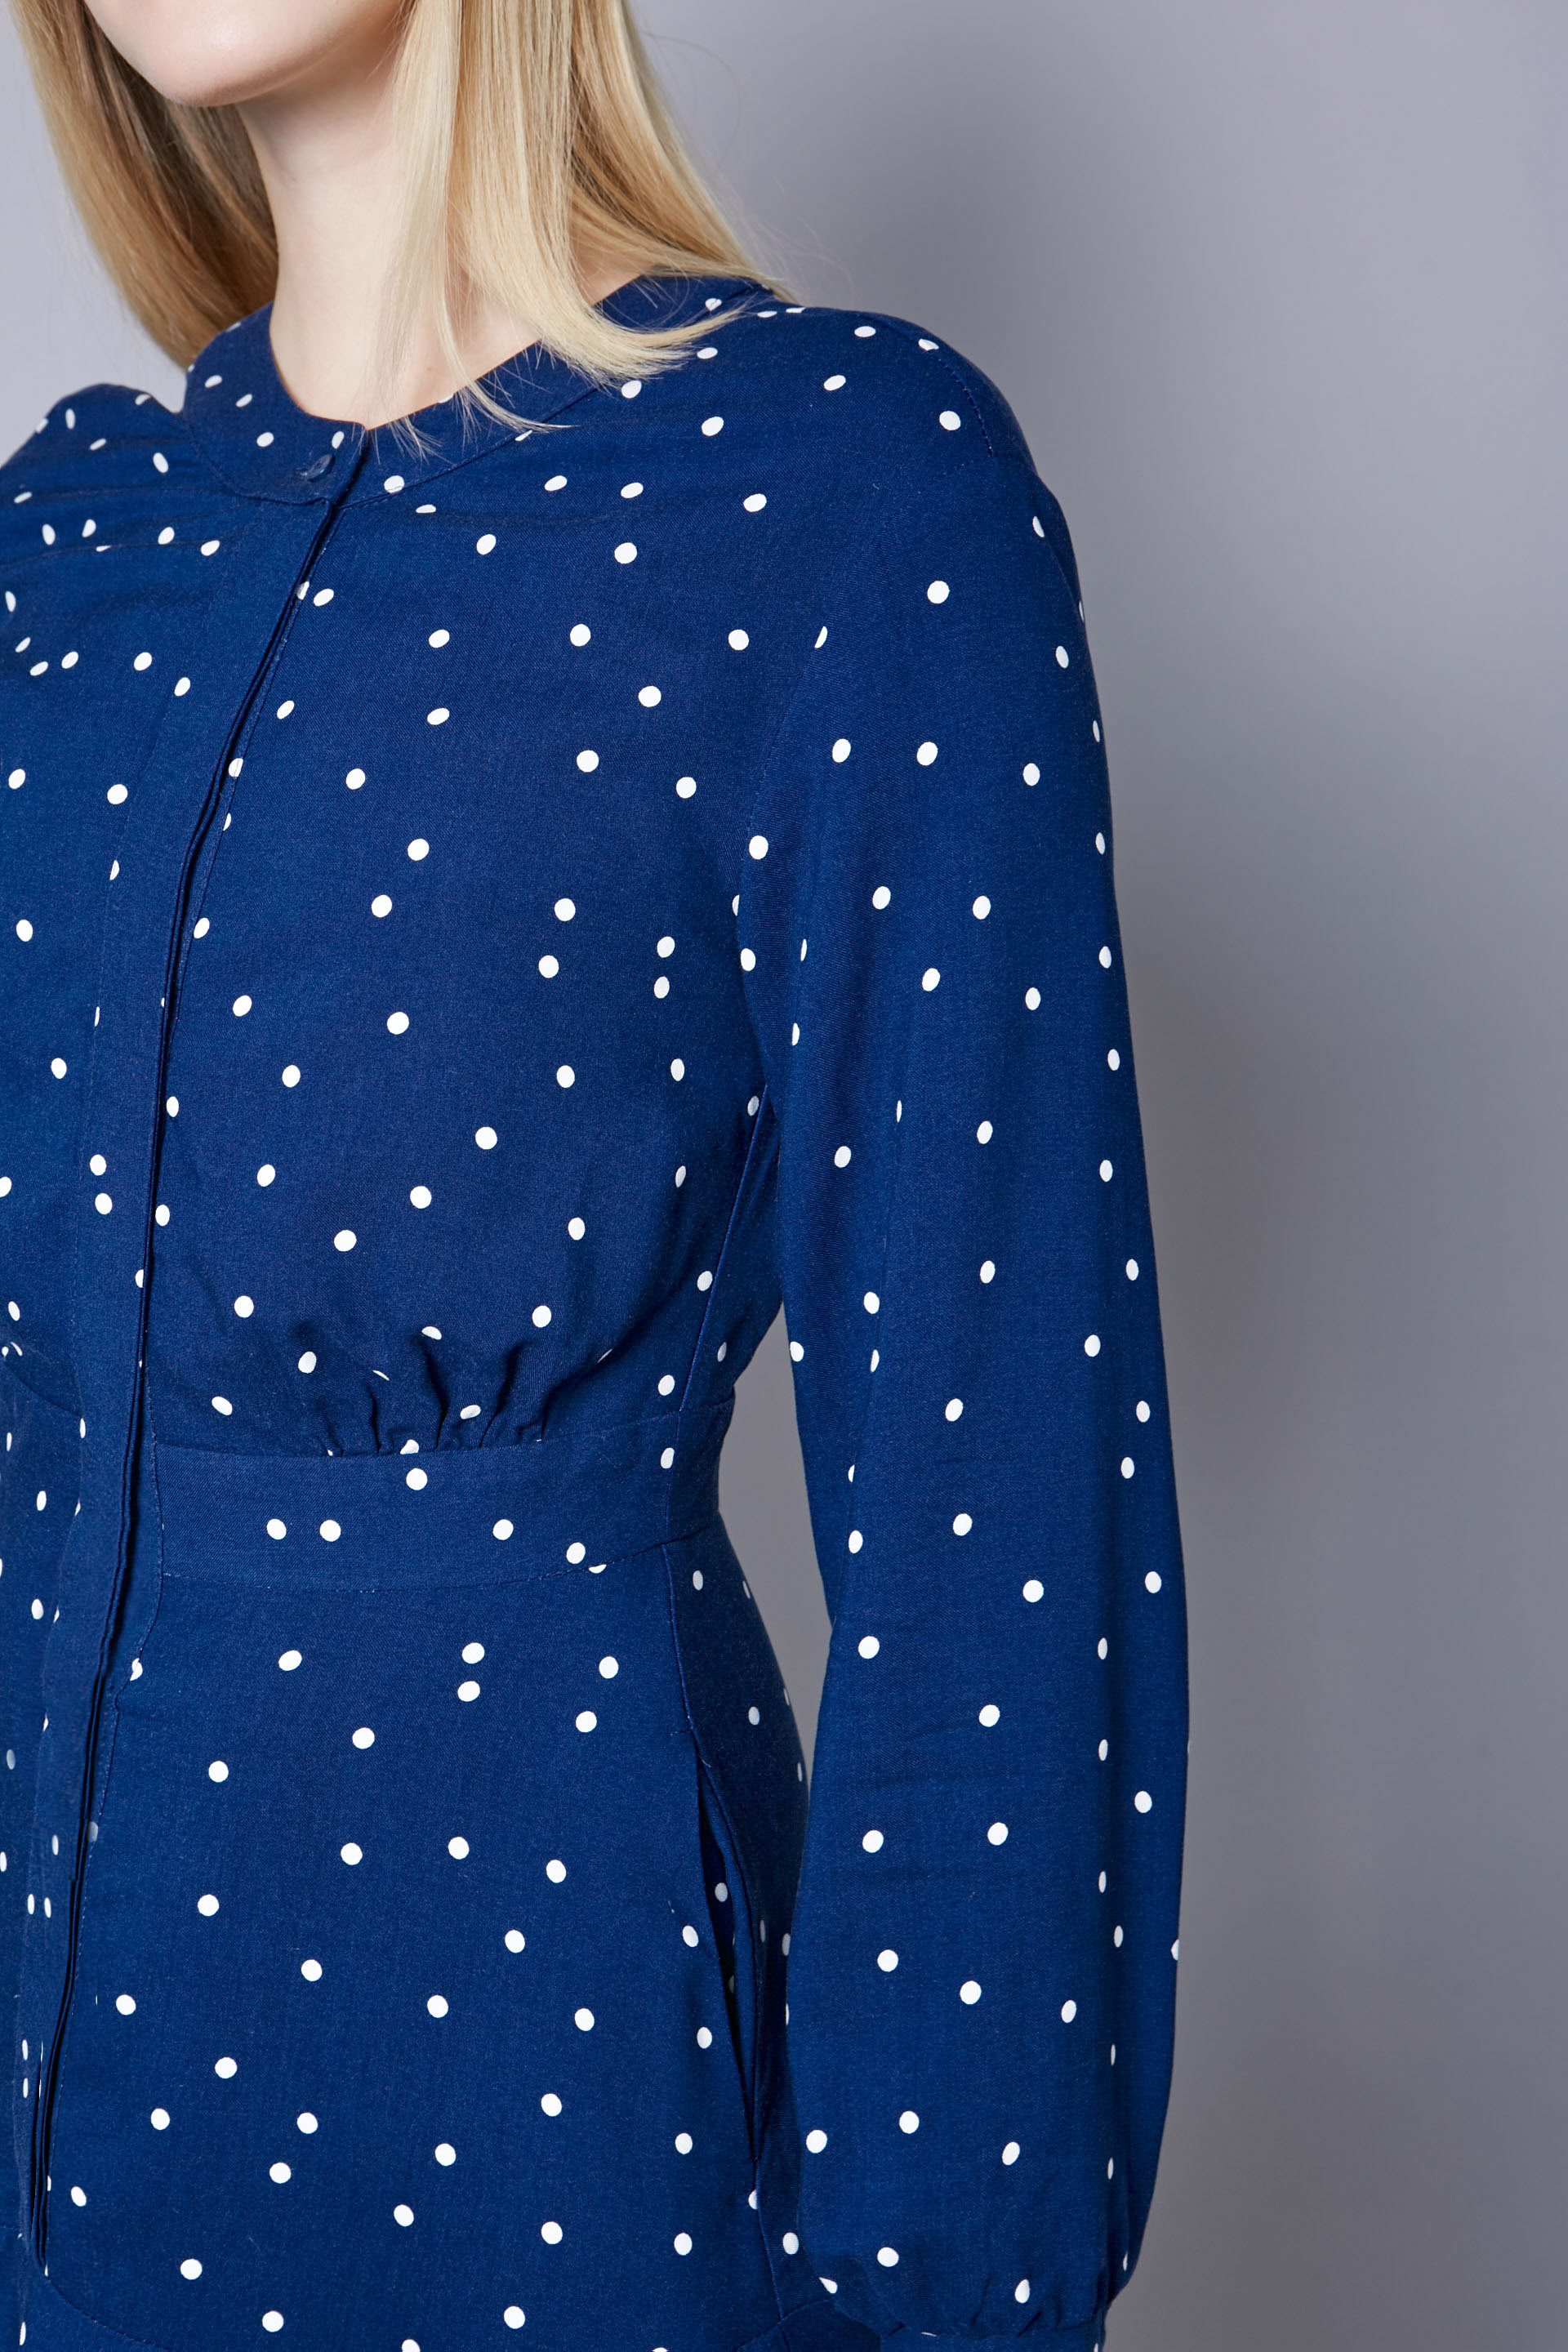 Short blue viscose dress with white polka dots, photo 4